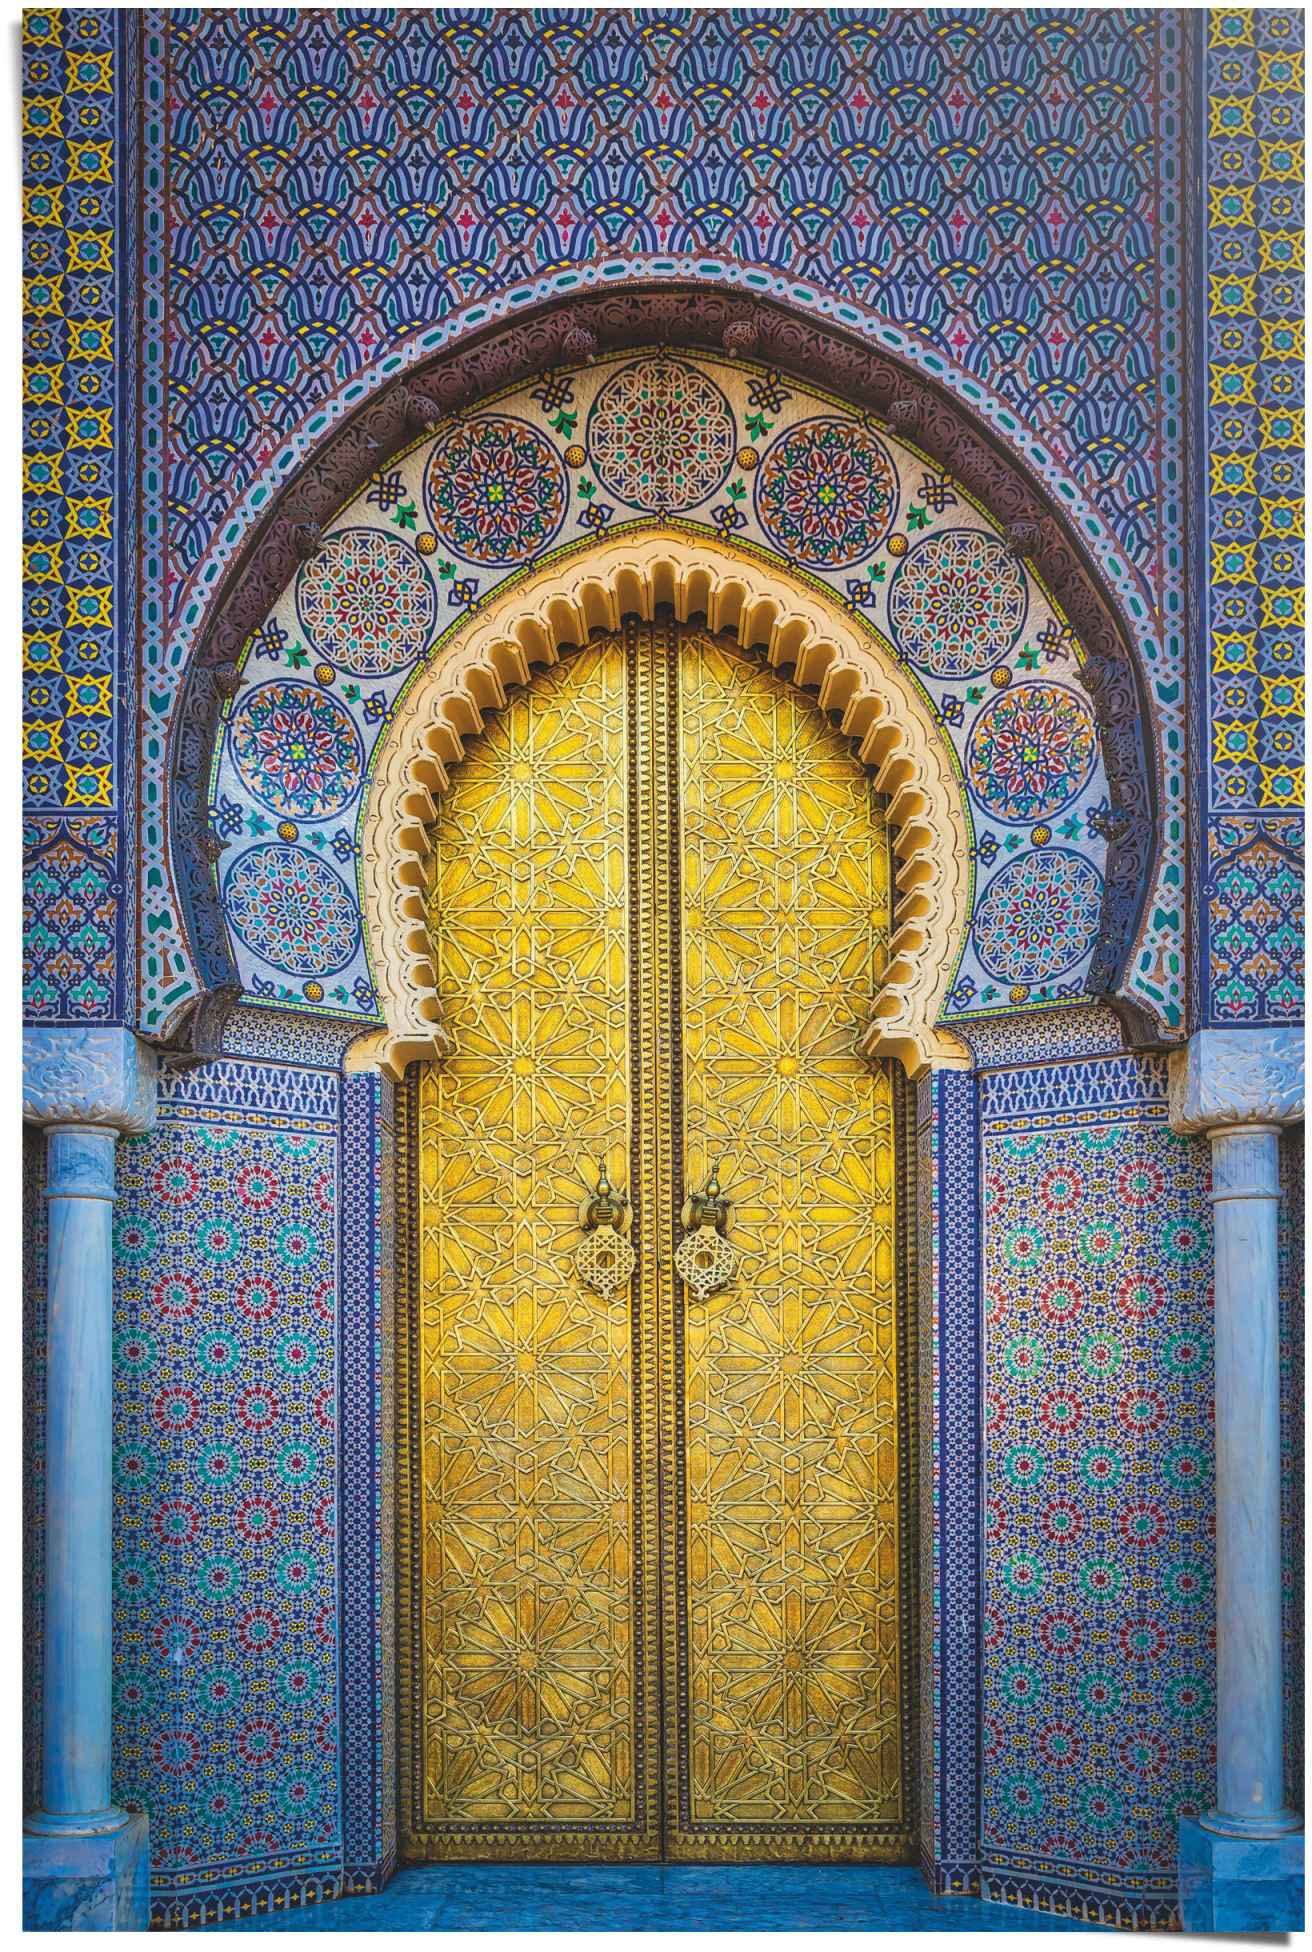 - - - (1 Fez, Orientalisch Poster St) Goldene Stilvoll Tür Köningspalast Farbenfroh Reinders!